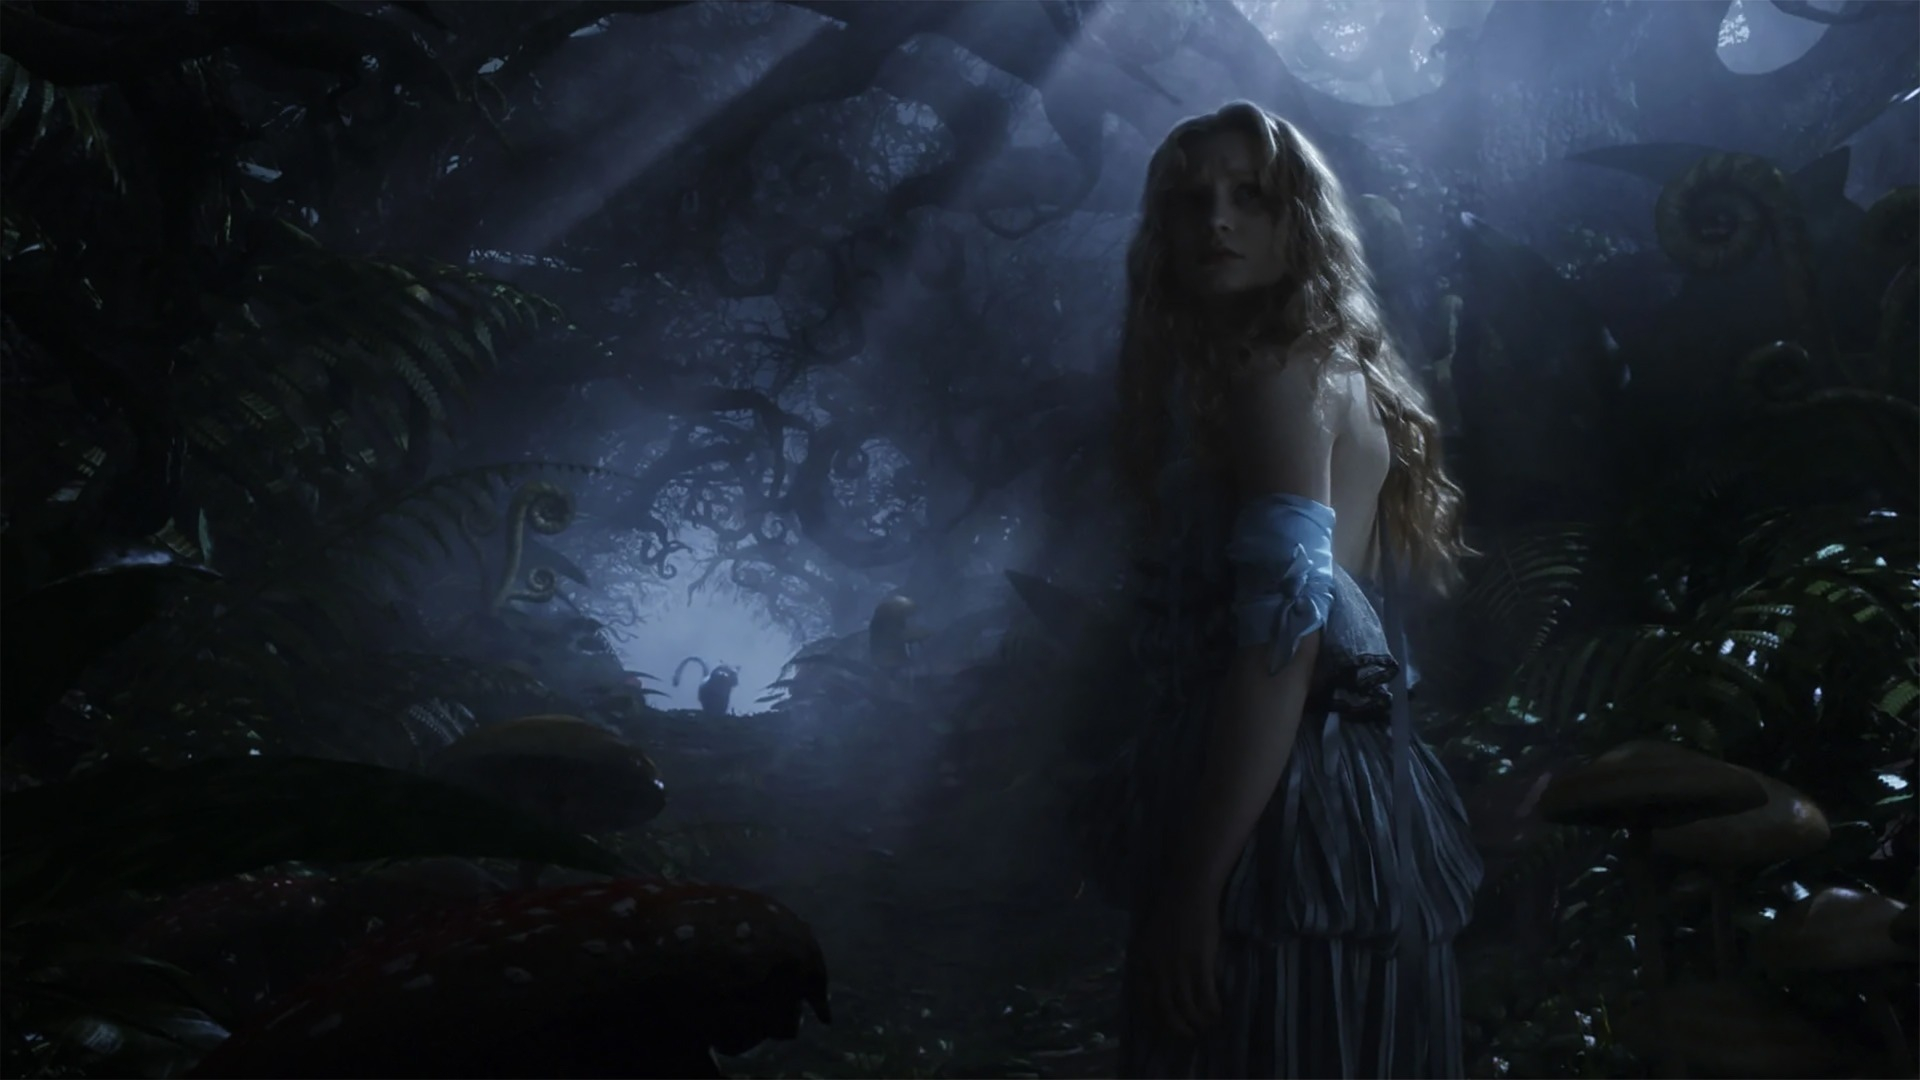 Alice in Wonderland (NL)